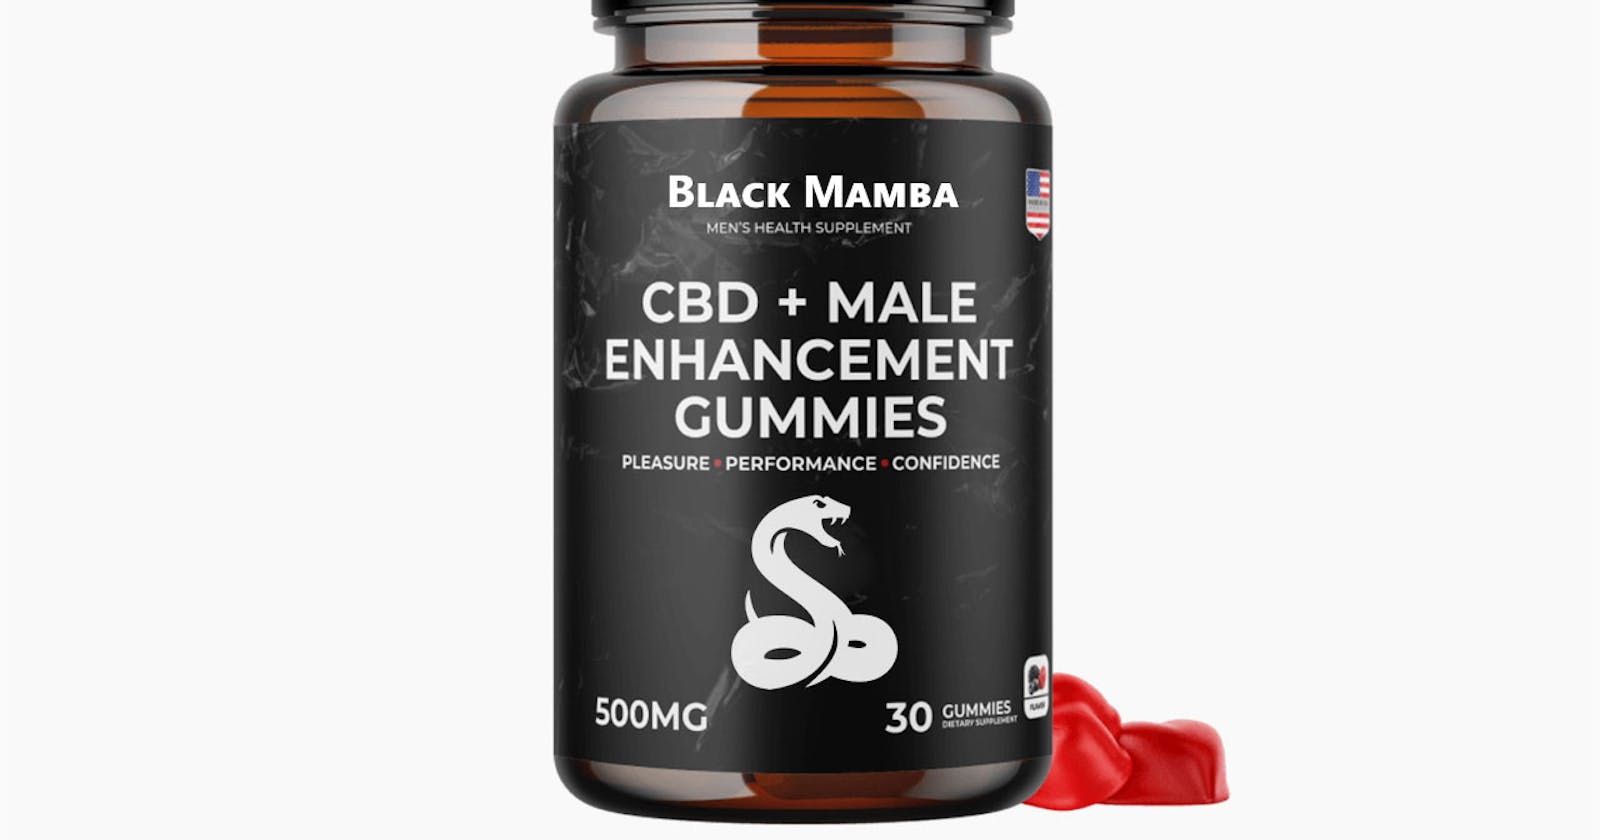 Black Mamba CBD Gummies Reviews: A Critical Review of the Legitimacy of Male Enhancement Claims